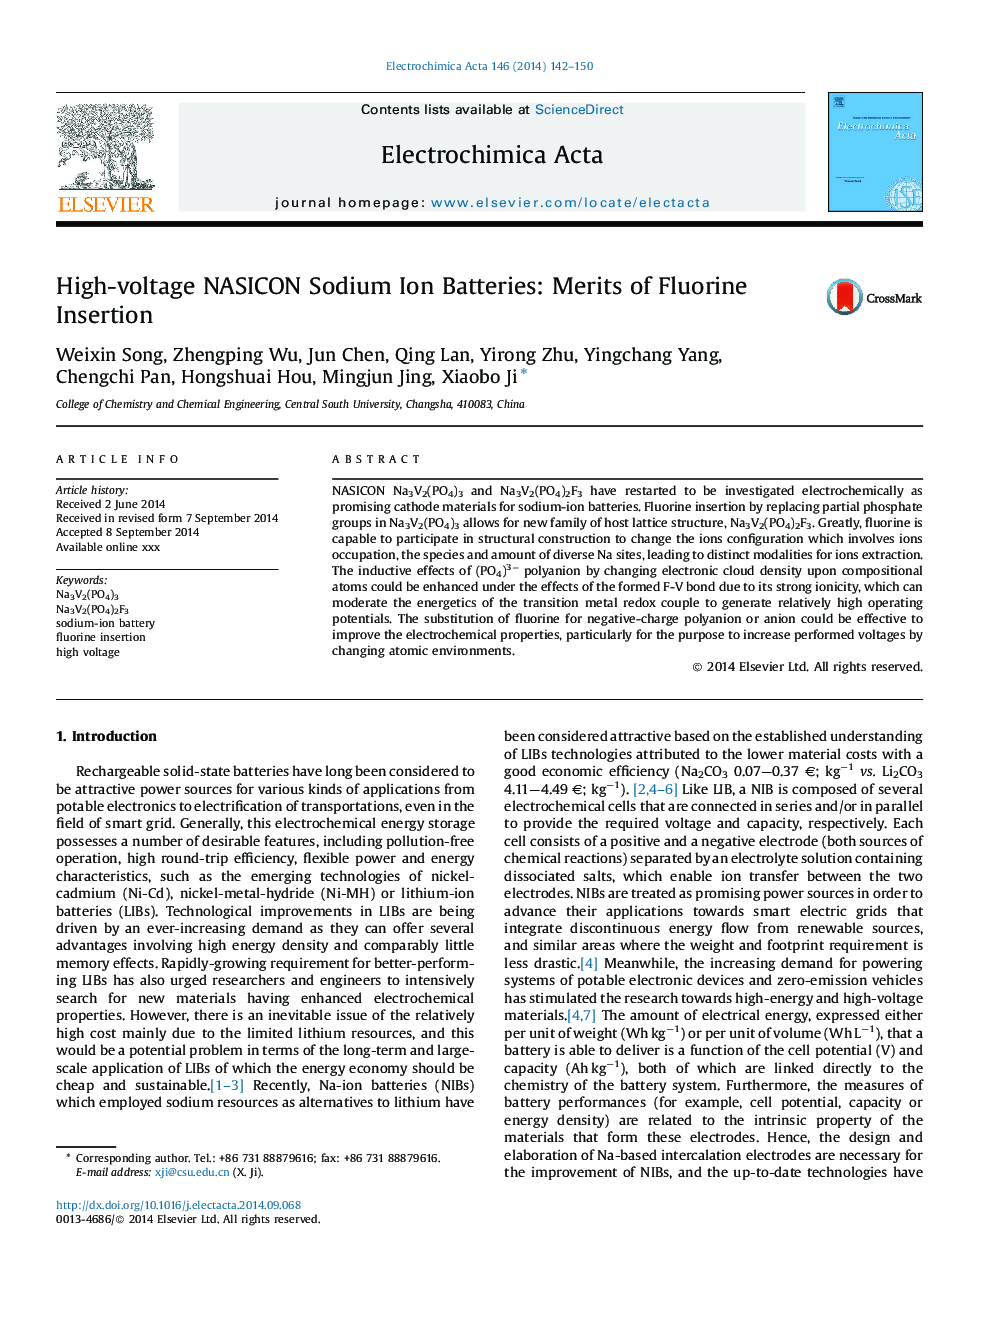 High-voltage NASICON Sodium Ion Batteries: Merits of Fluorine Insertion